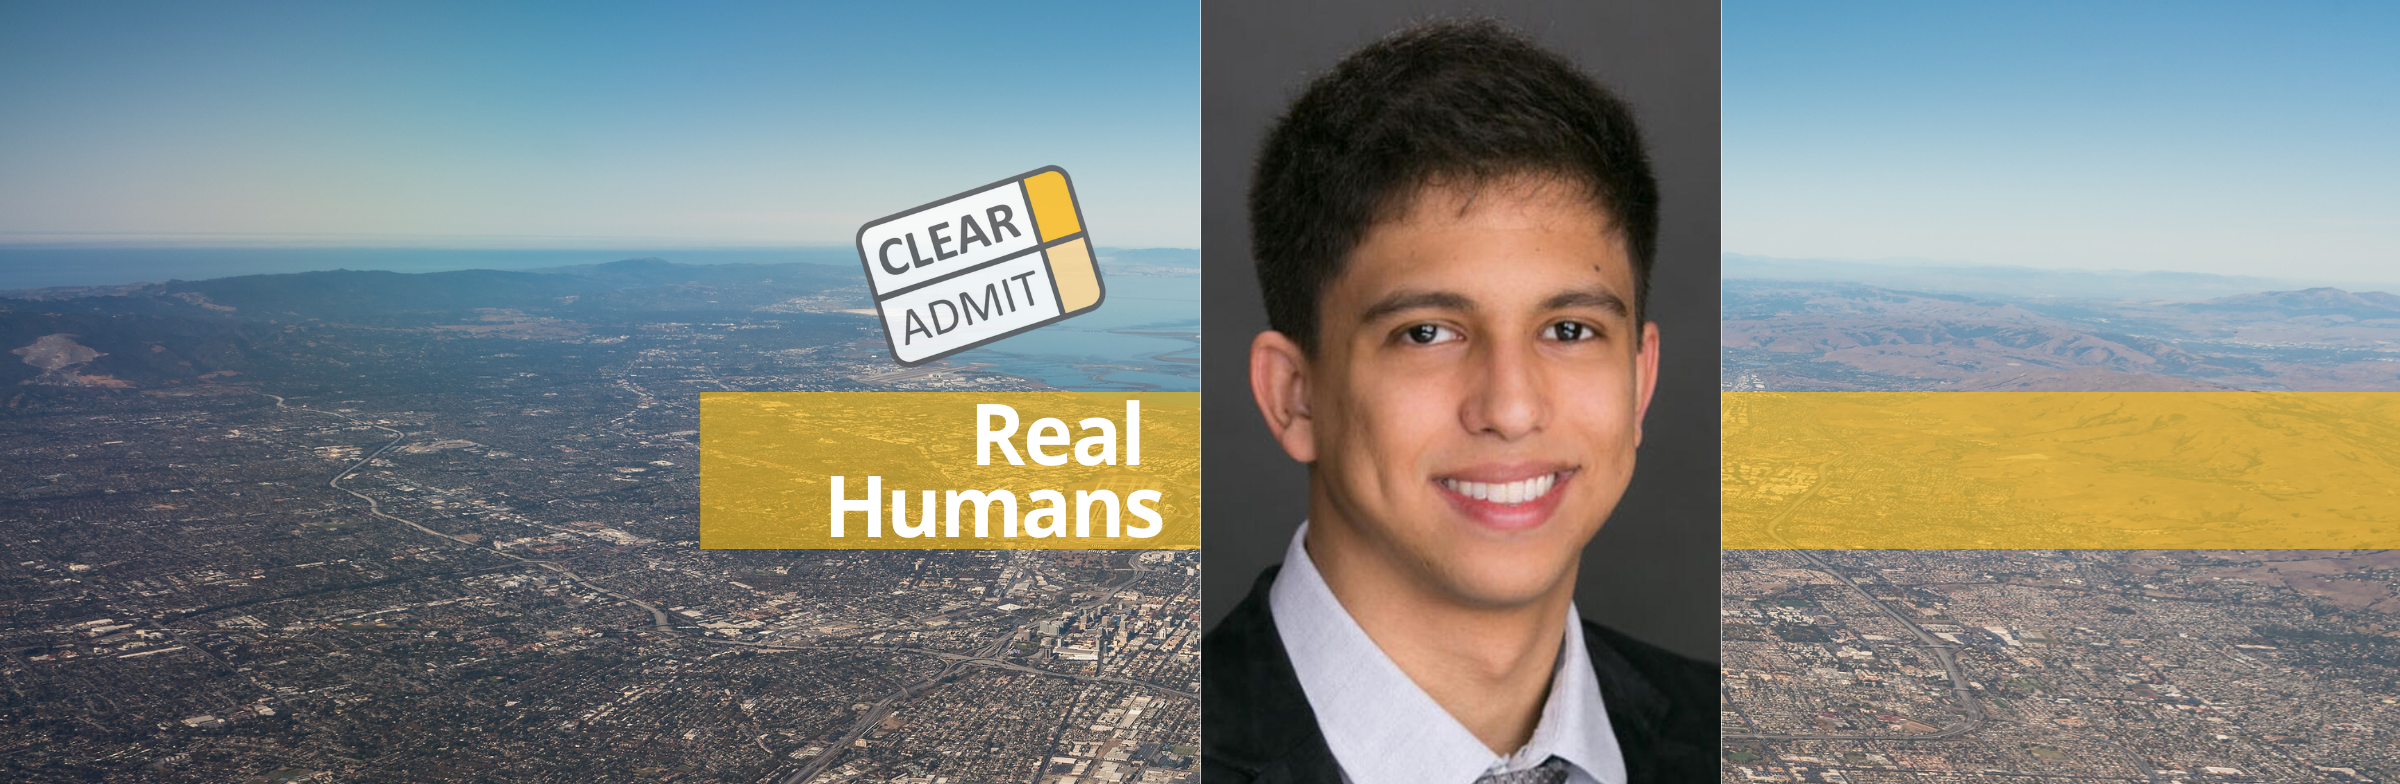 Image for Real Humans of Google: Rafael Ferreira, CBS MSFE ’19, Software Engineer